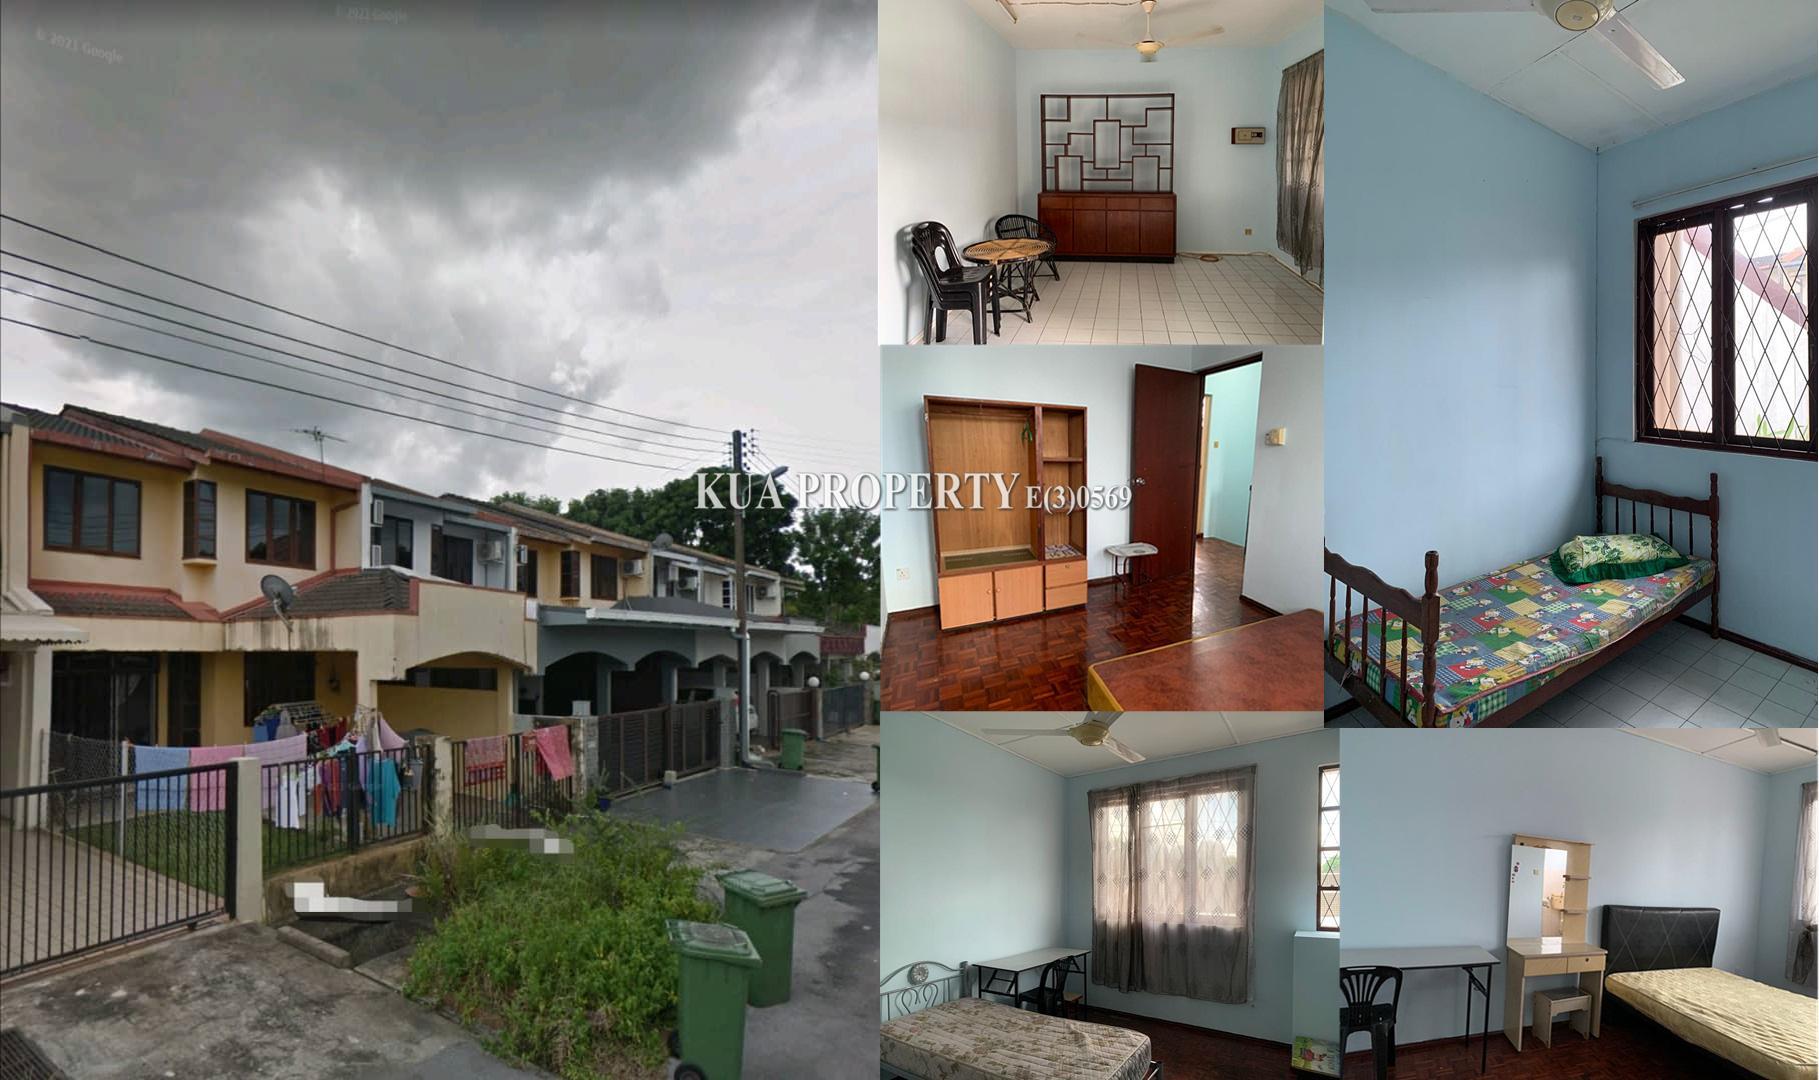 Double Storey Terrace intermediate House For Rent!at Bayor Bukit, Tabuan Jaya